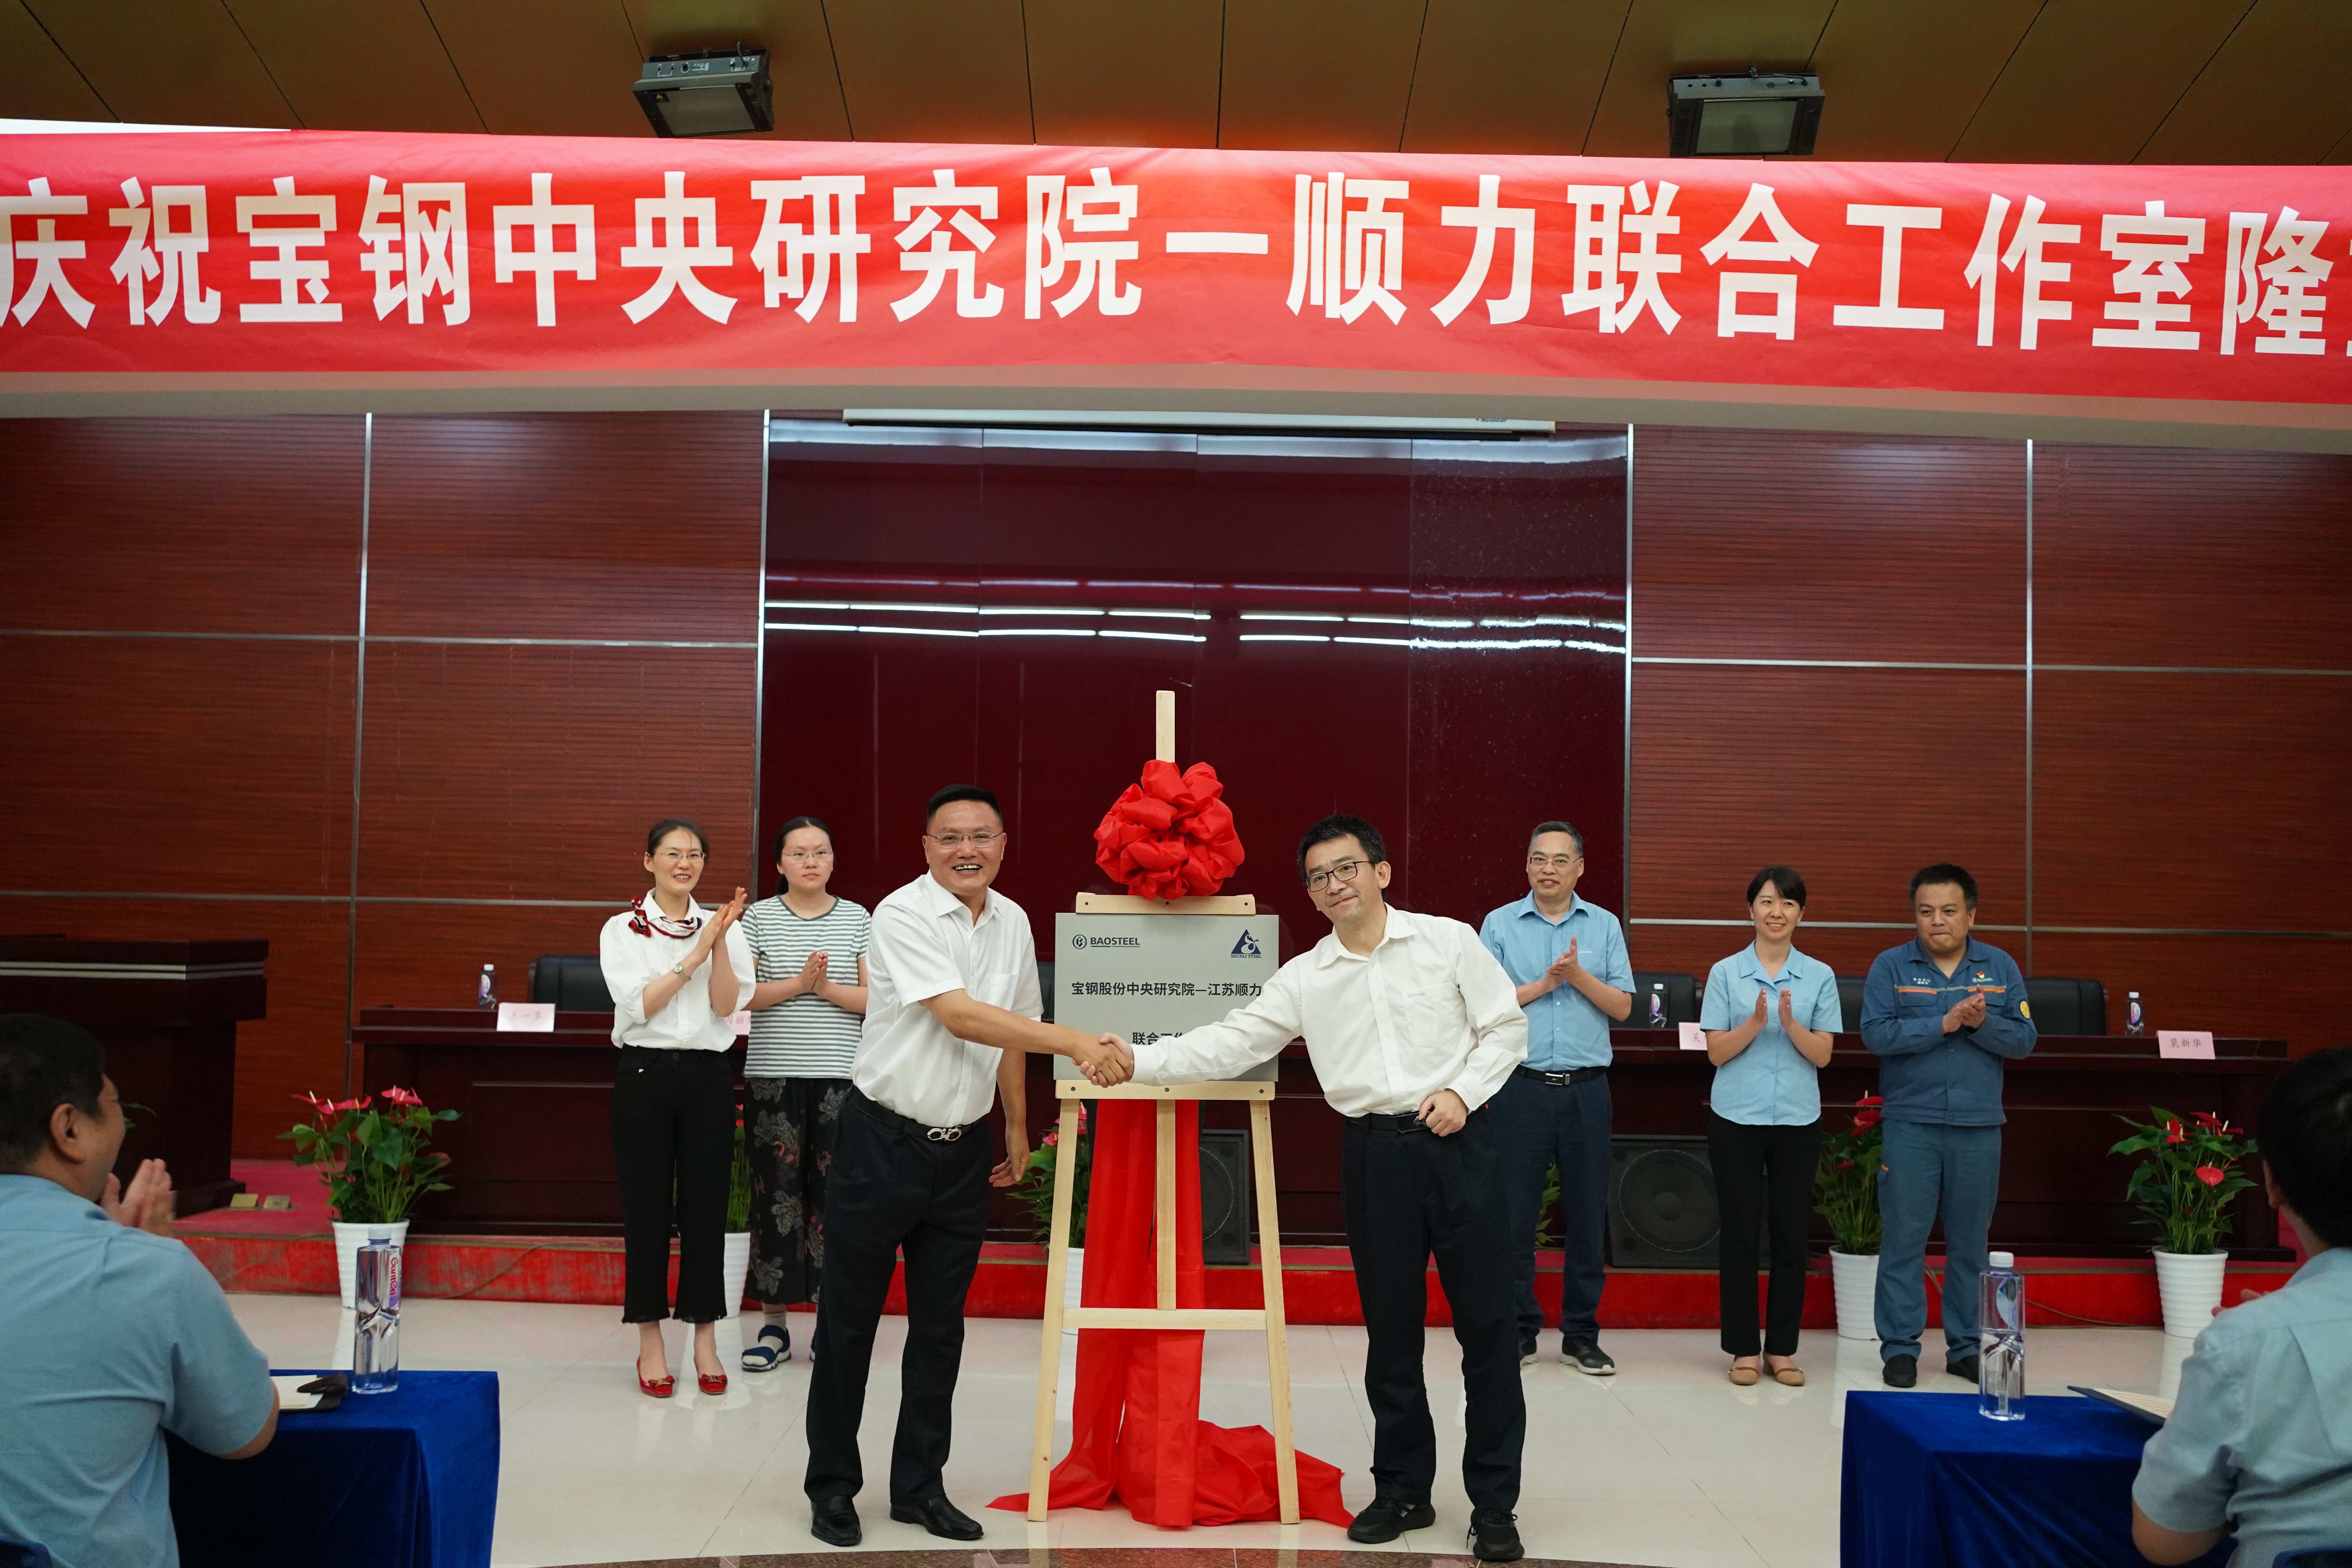 Baowu Group Baosteel Central Research Institute-Shunli Joint Studio wurde in der Shunli Steel-Gruppe großartig enthüllt